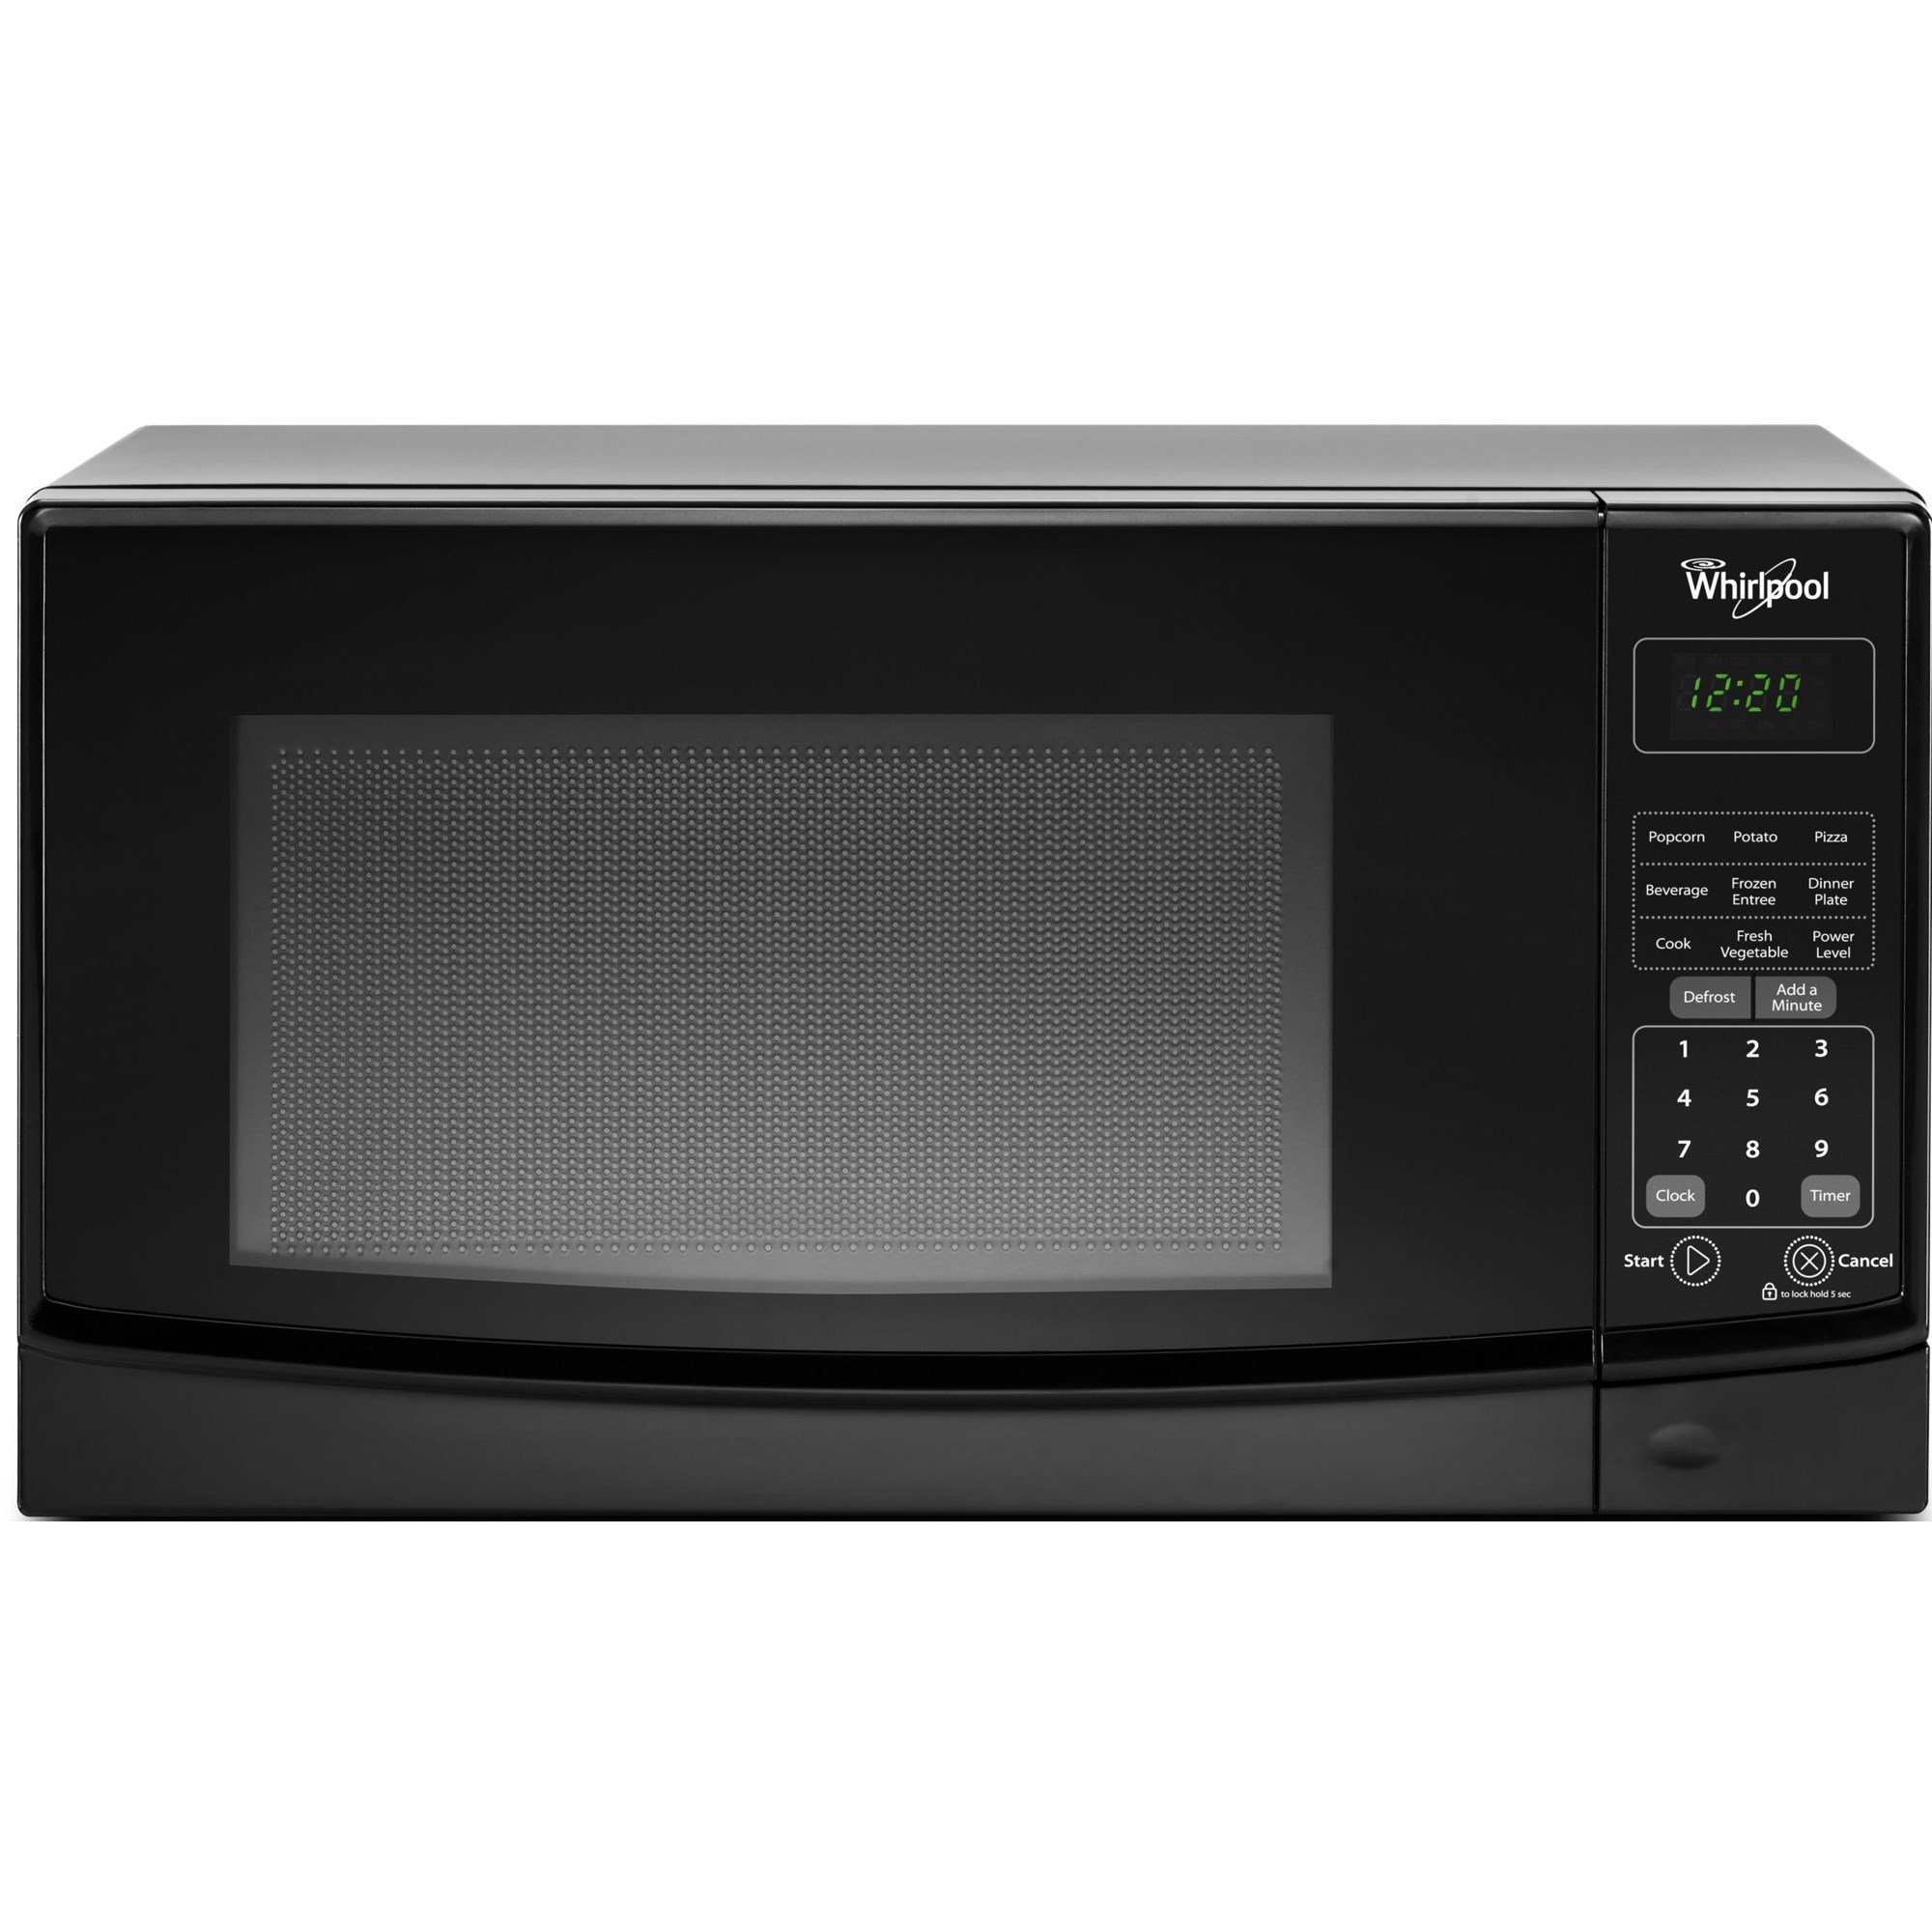 1.6 cu. ft. Countertop Microwave with 1,200-Watt Cooking Power White  WMC30516HW